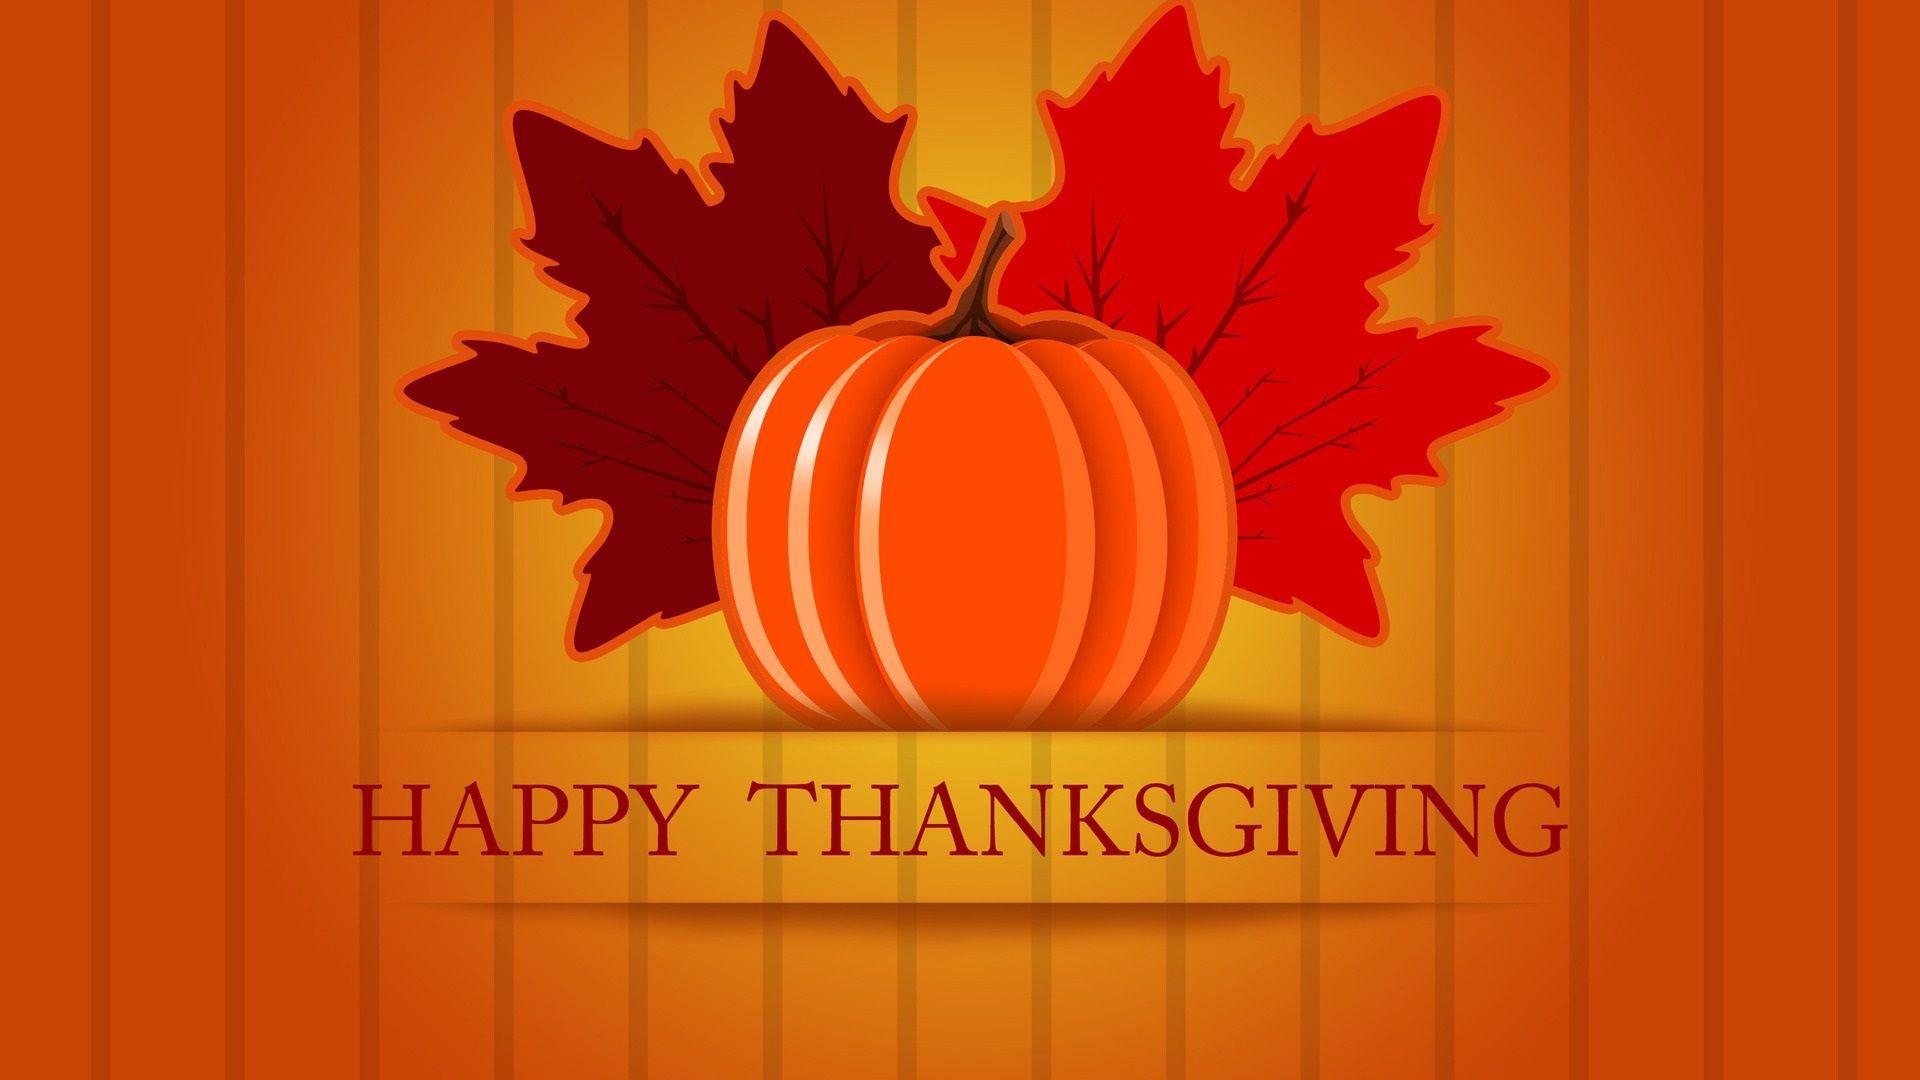 Thanksgiving HD Wallpaper, Get Free top quality Thanksgiving HD